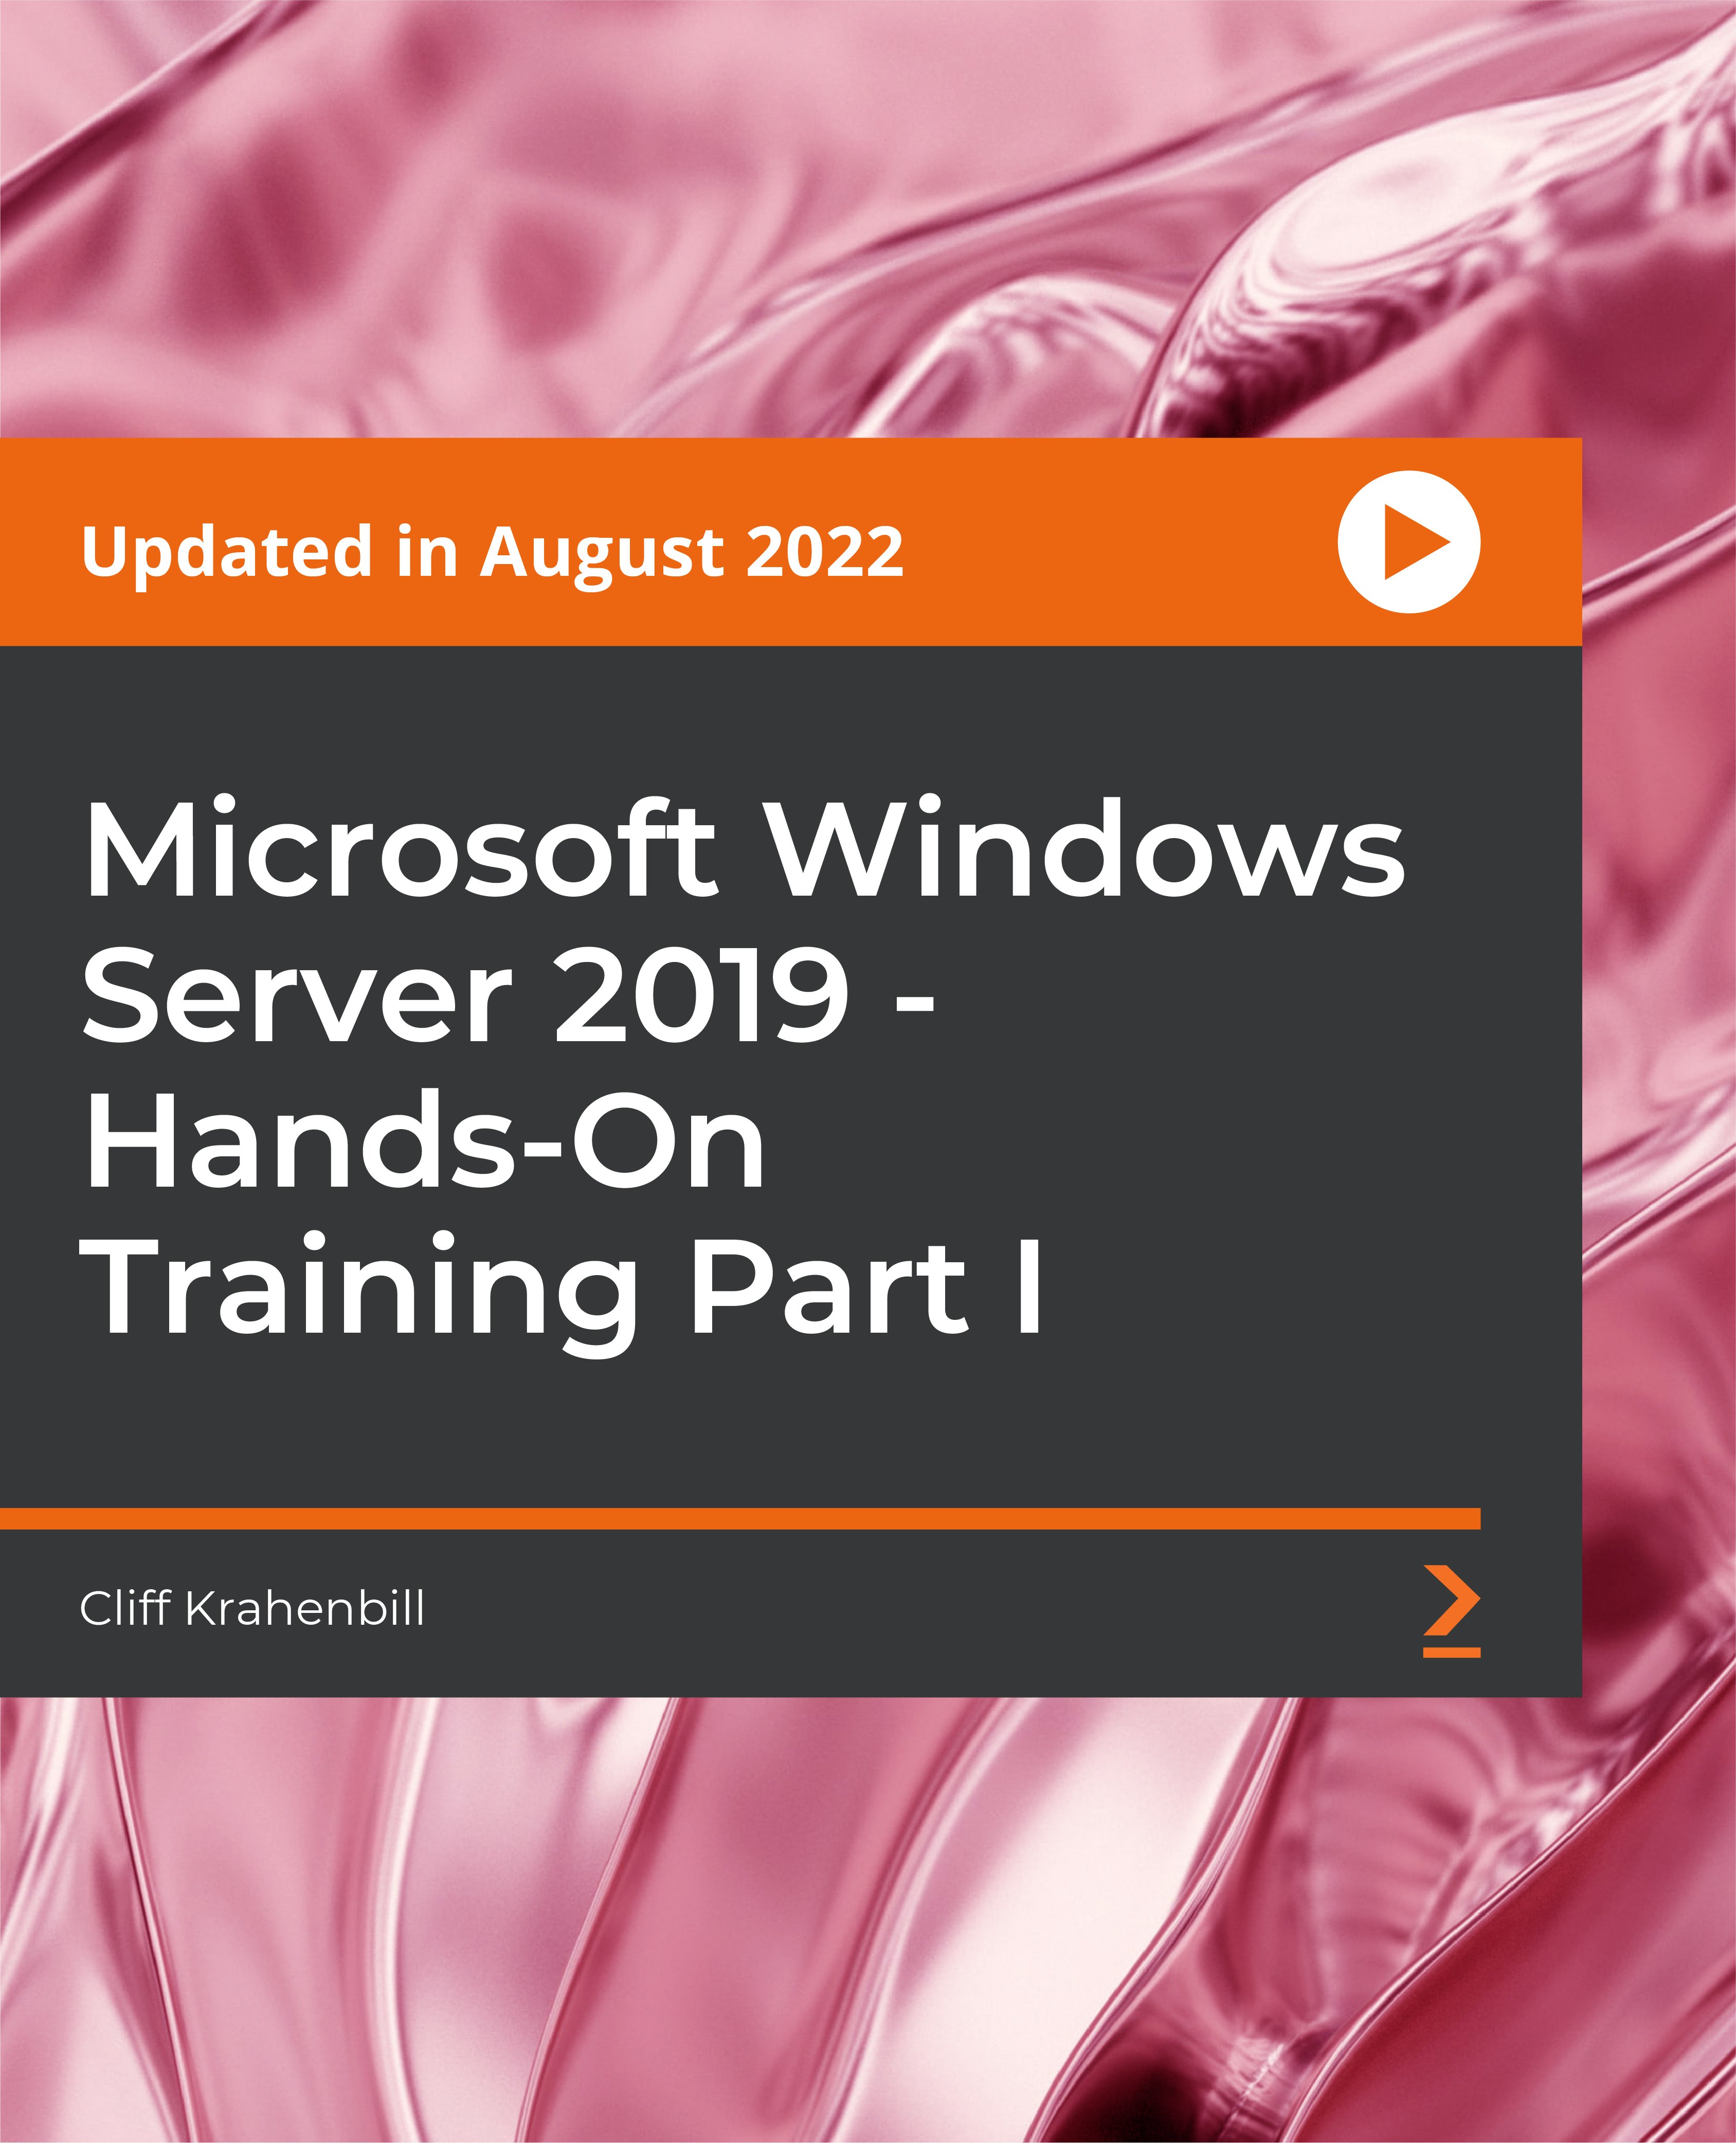 Microsoft Windows Server 2019 - Hands-On Training Part I